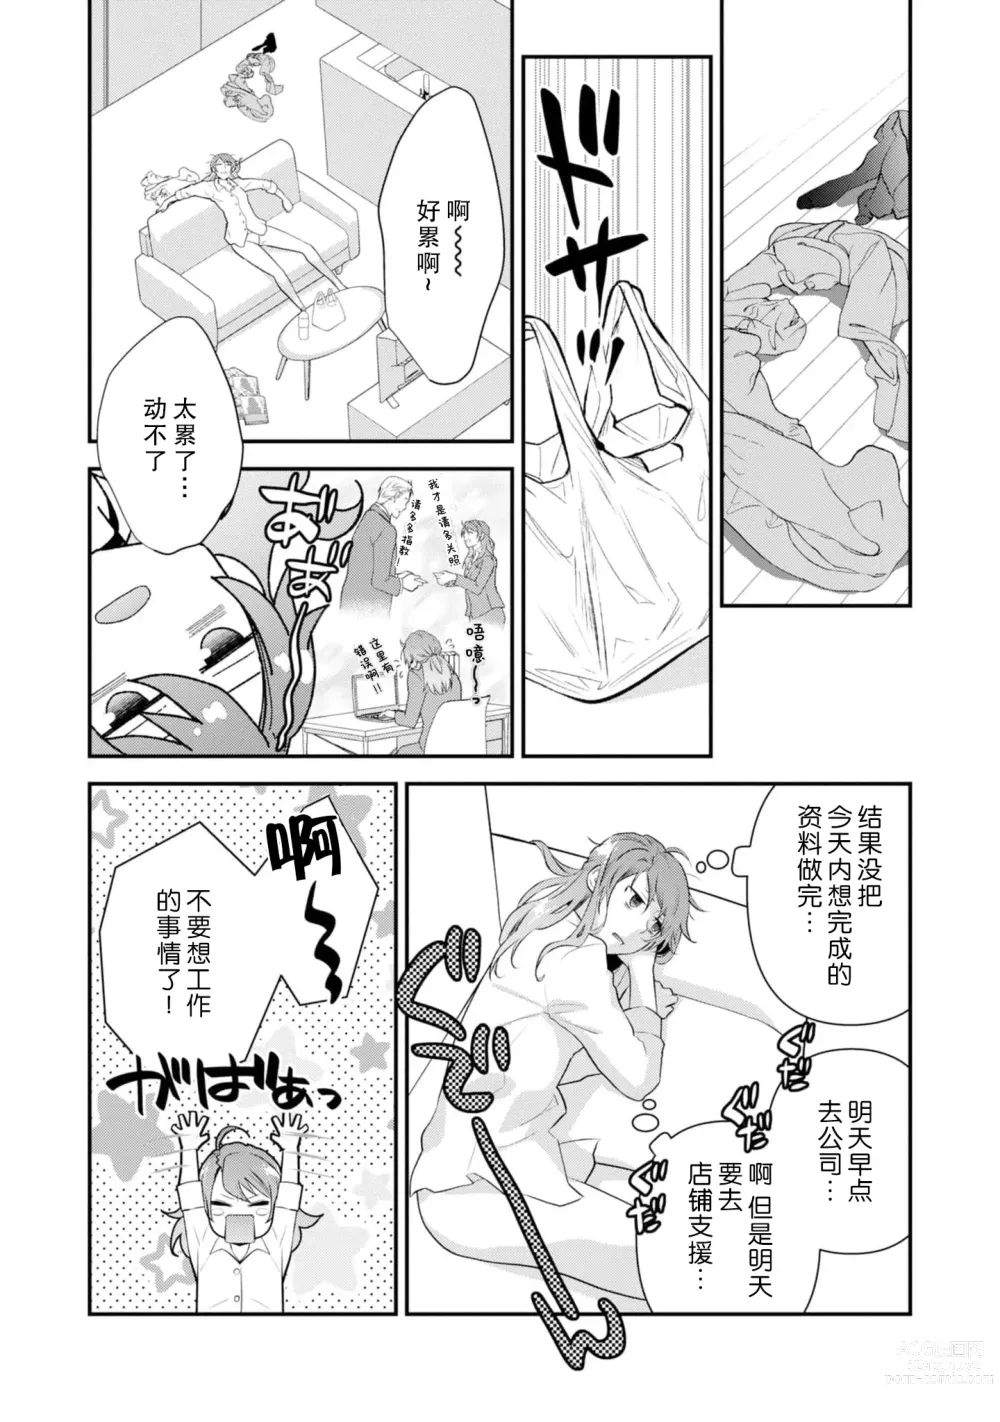 Page 9 of manga 最终BOSS转生而来，因此拿下了他的童贞 1-9 end